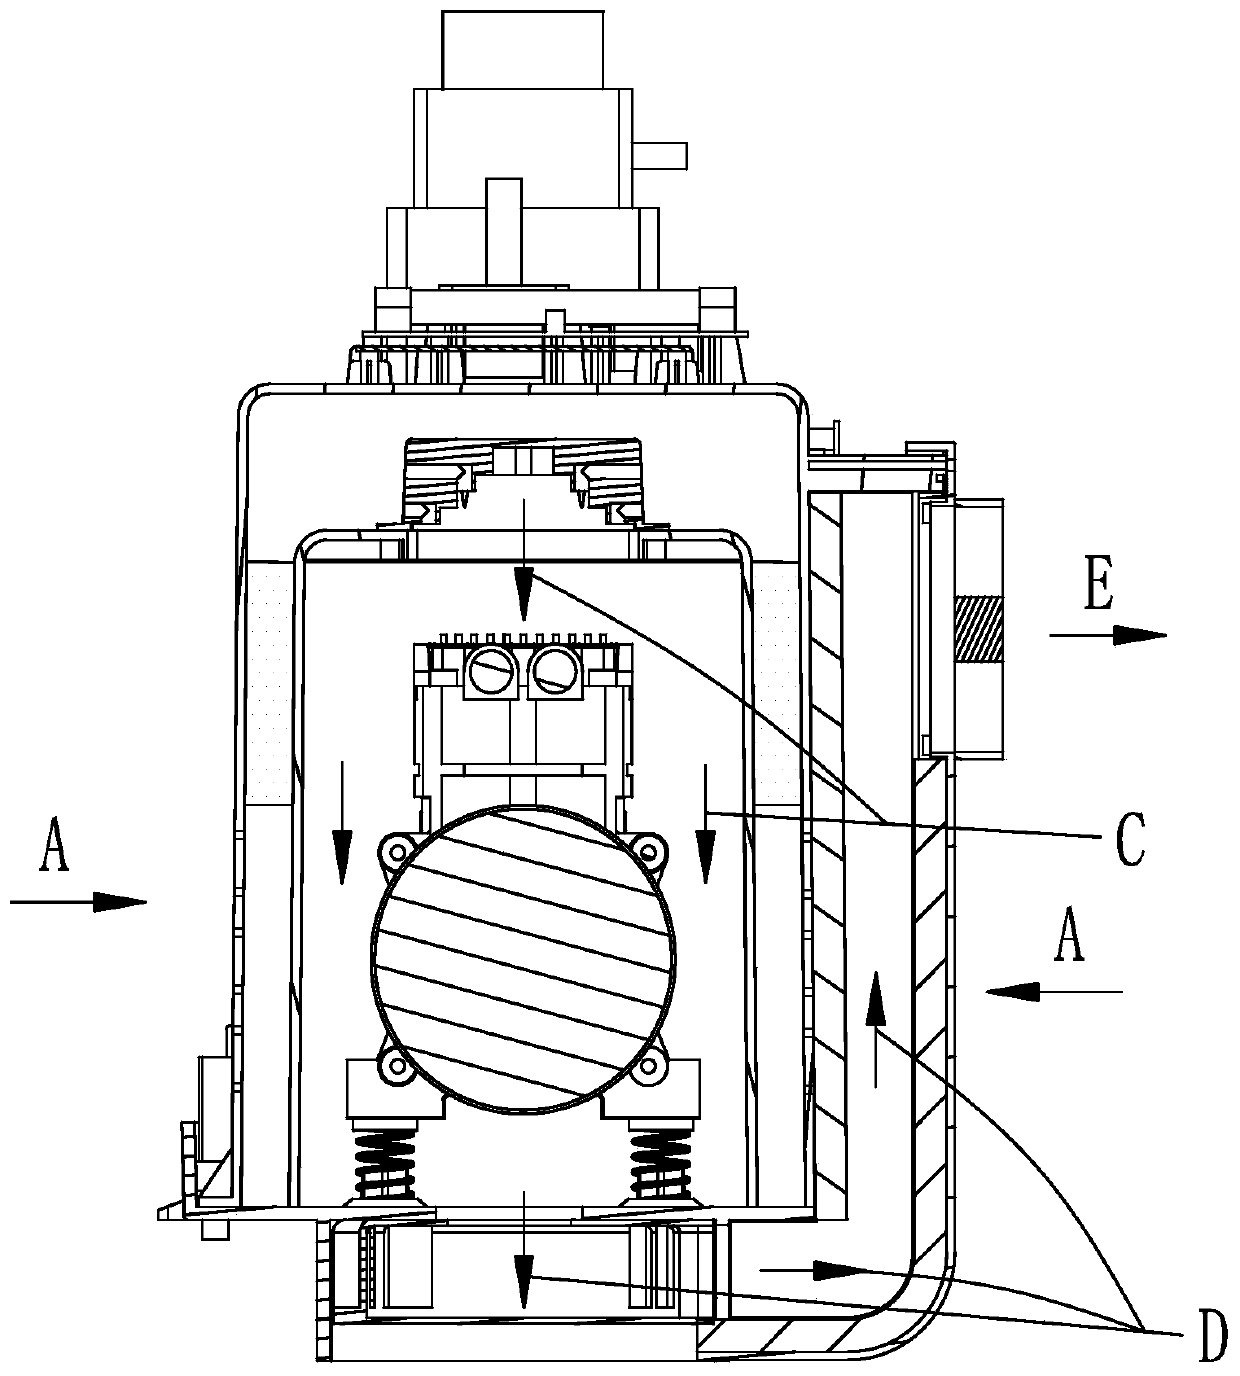 Airway structure and corresponding oxygen generator using same